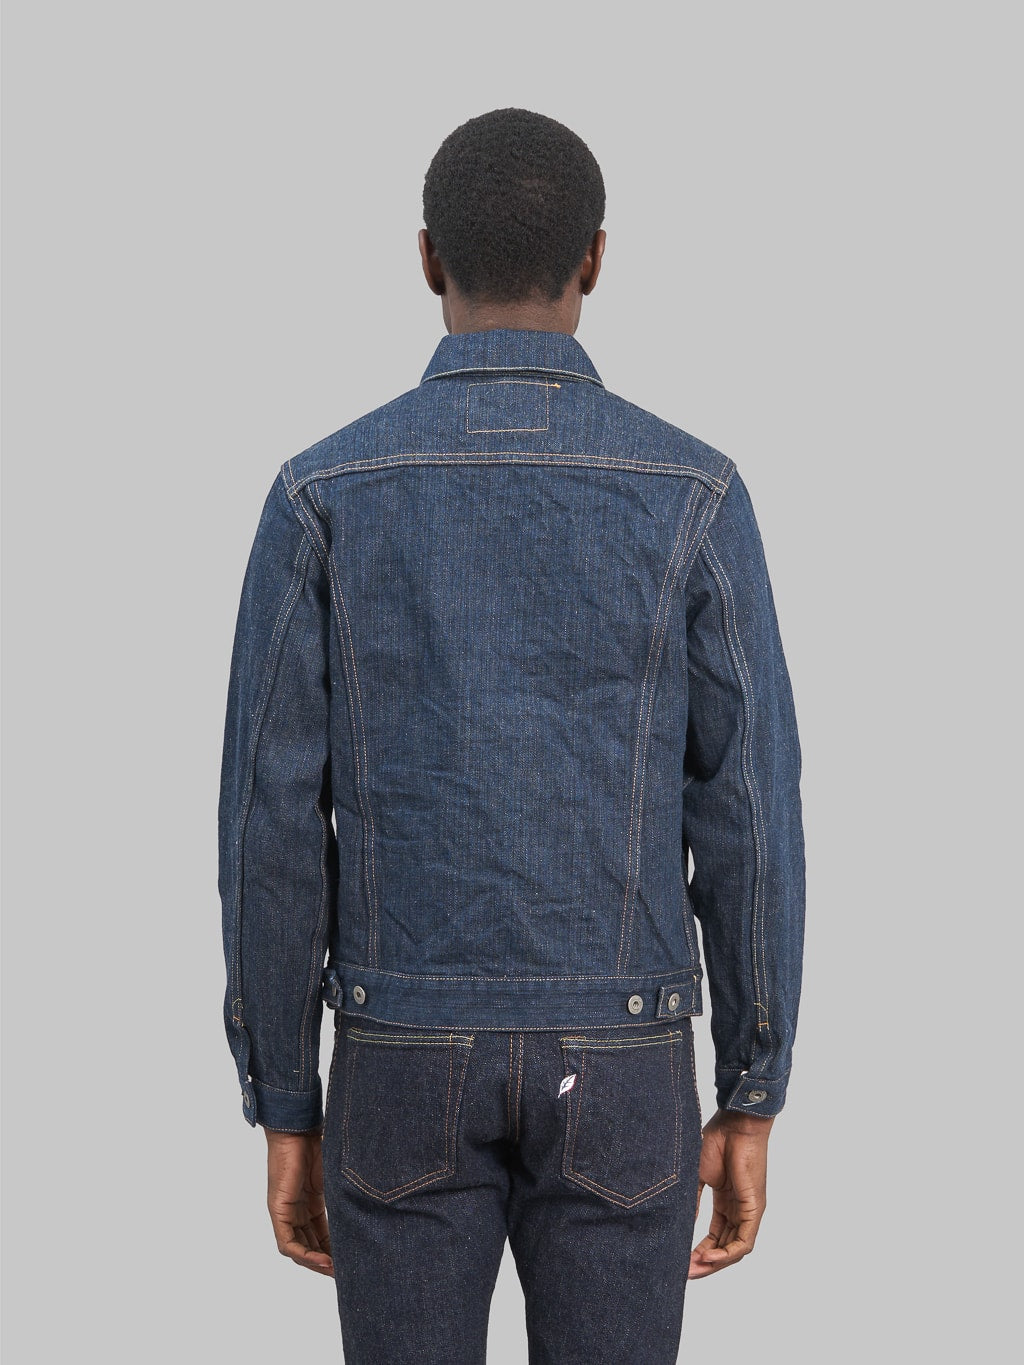  oni denim kiwami 16oz natural indigo type III jacket back fit